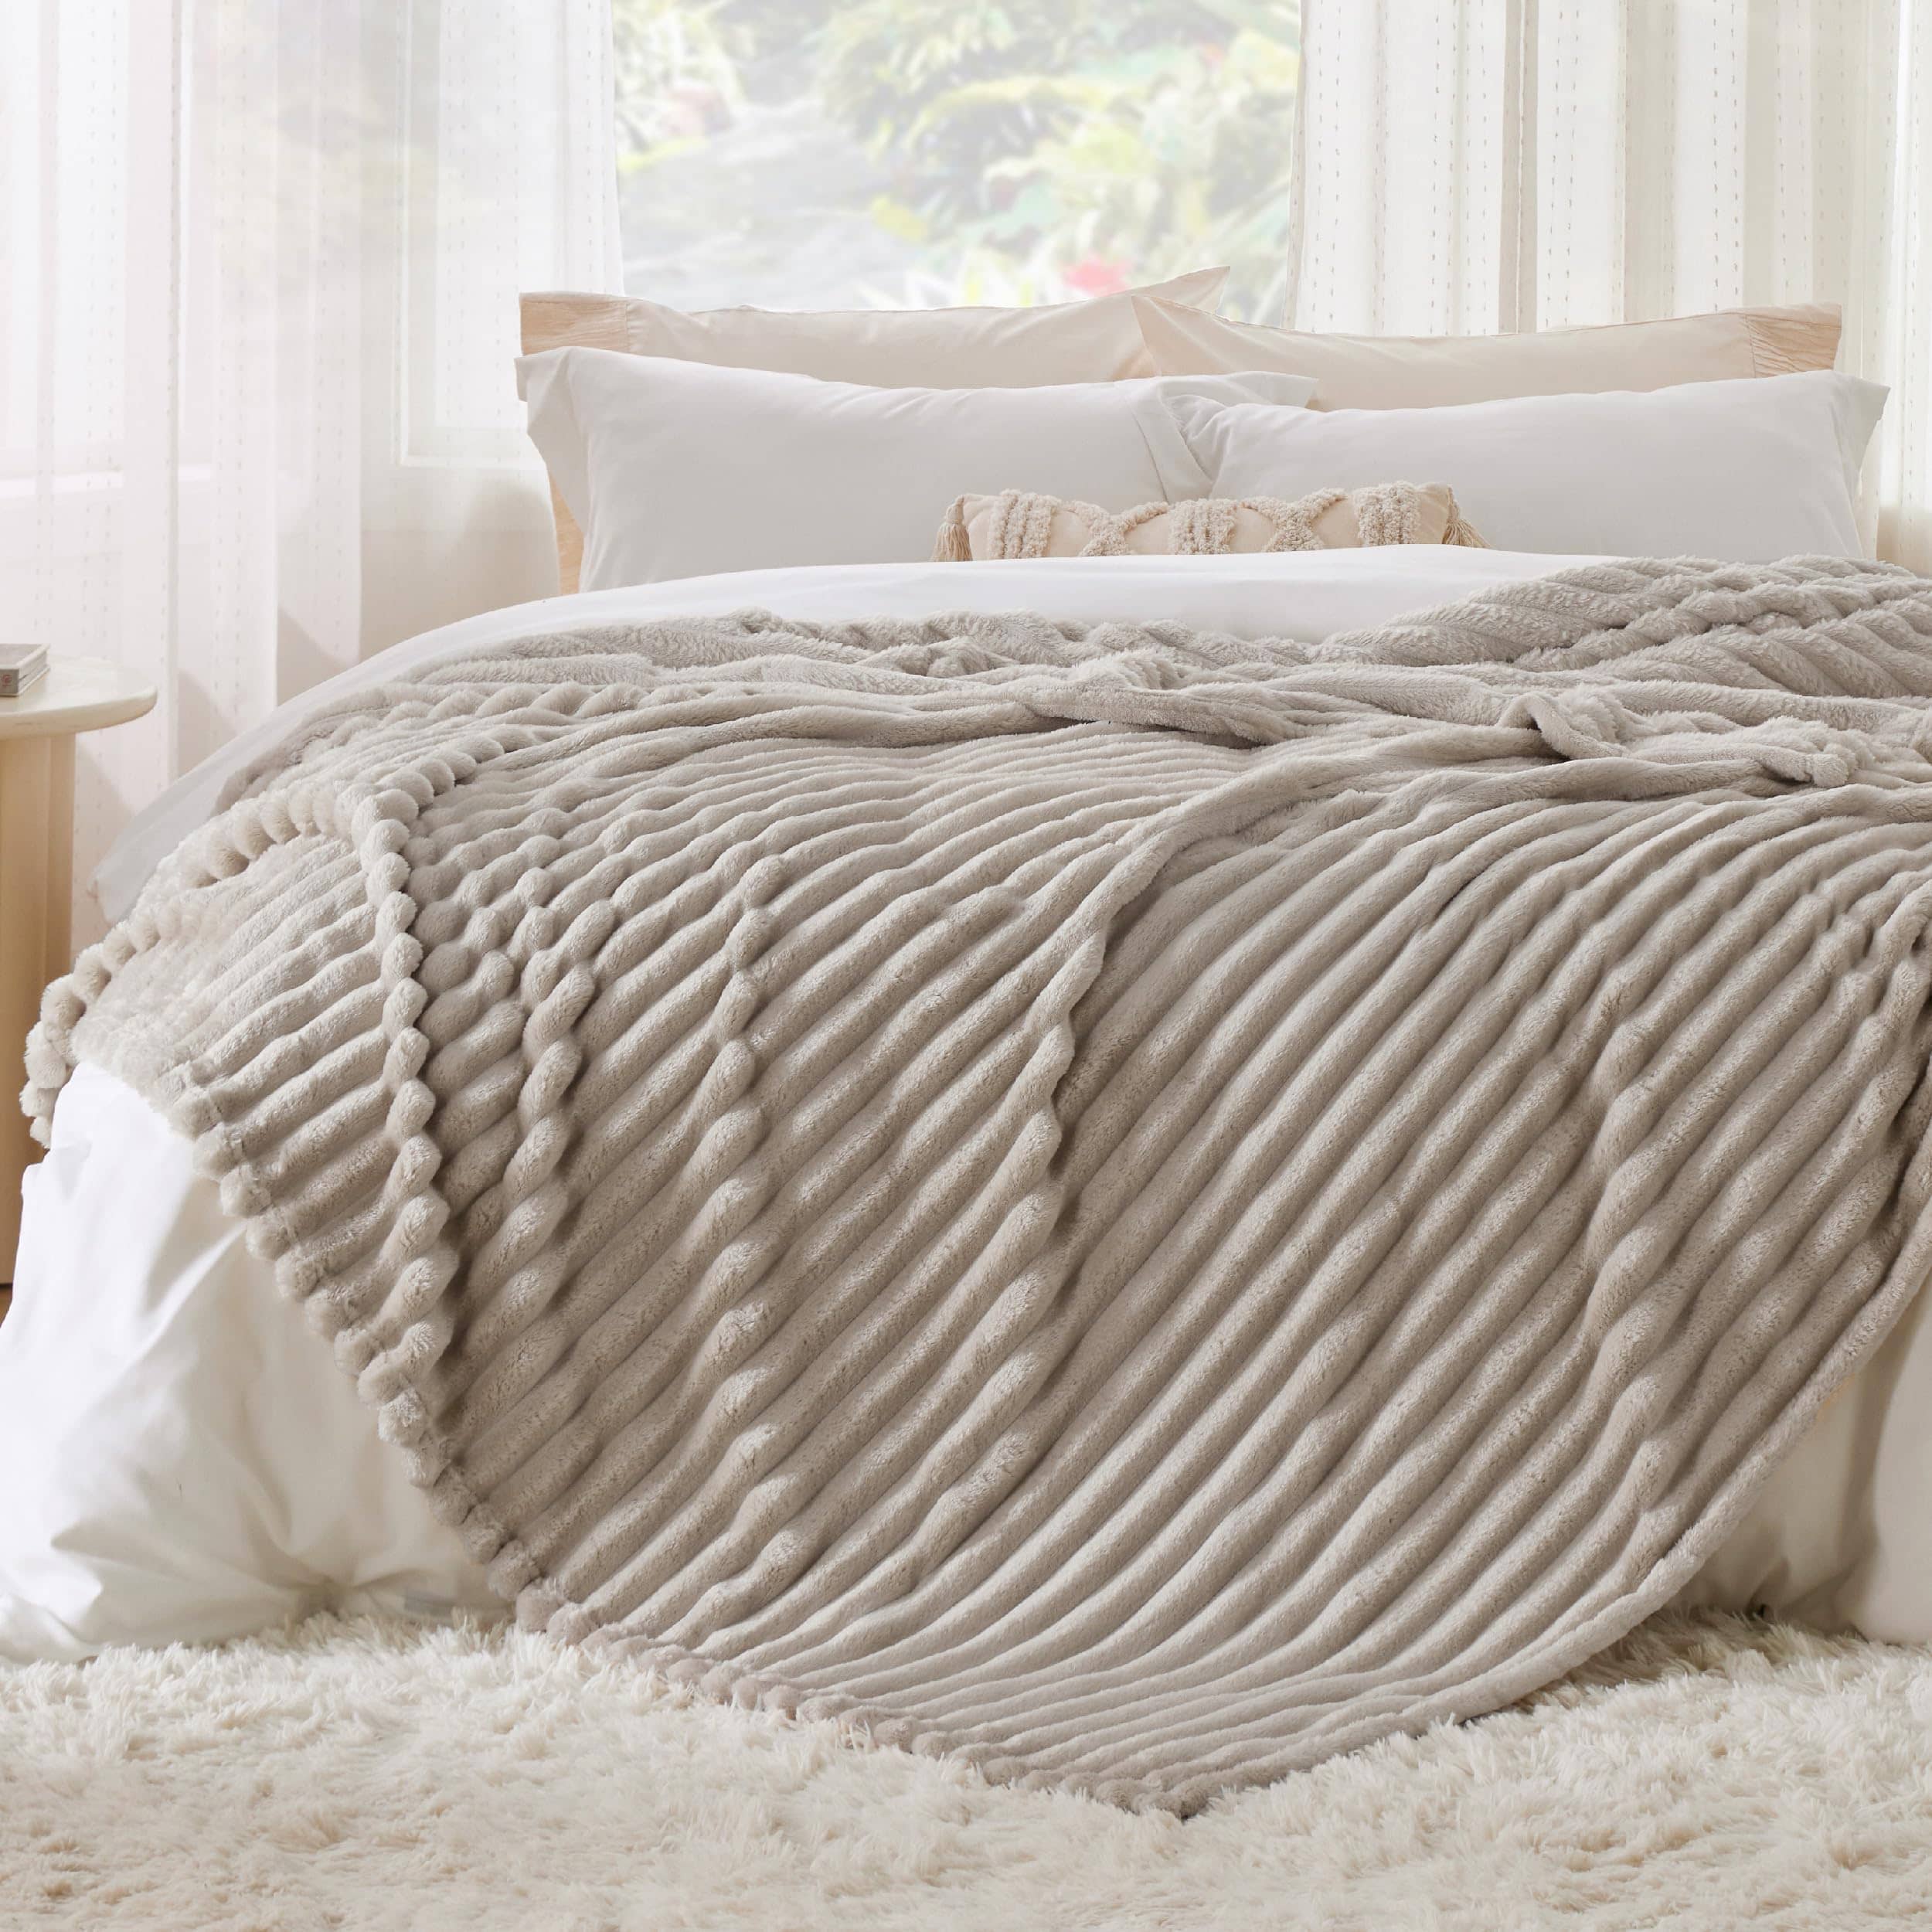 JFLEGAL Solid Striped Throw Blanket Flannel Fleece Soft Adult Bed